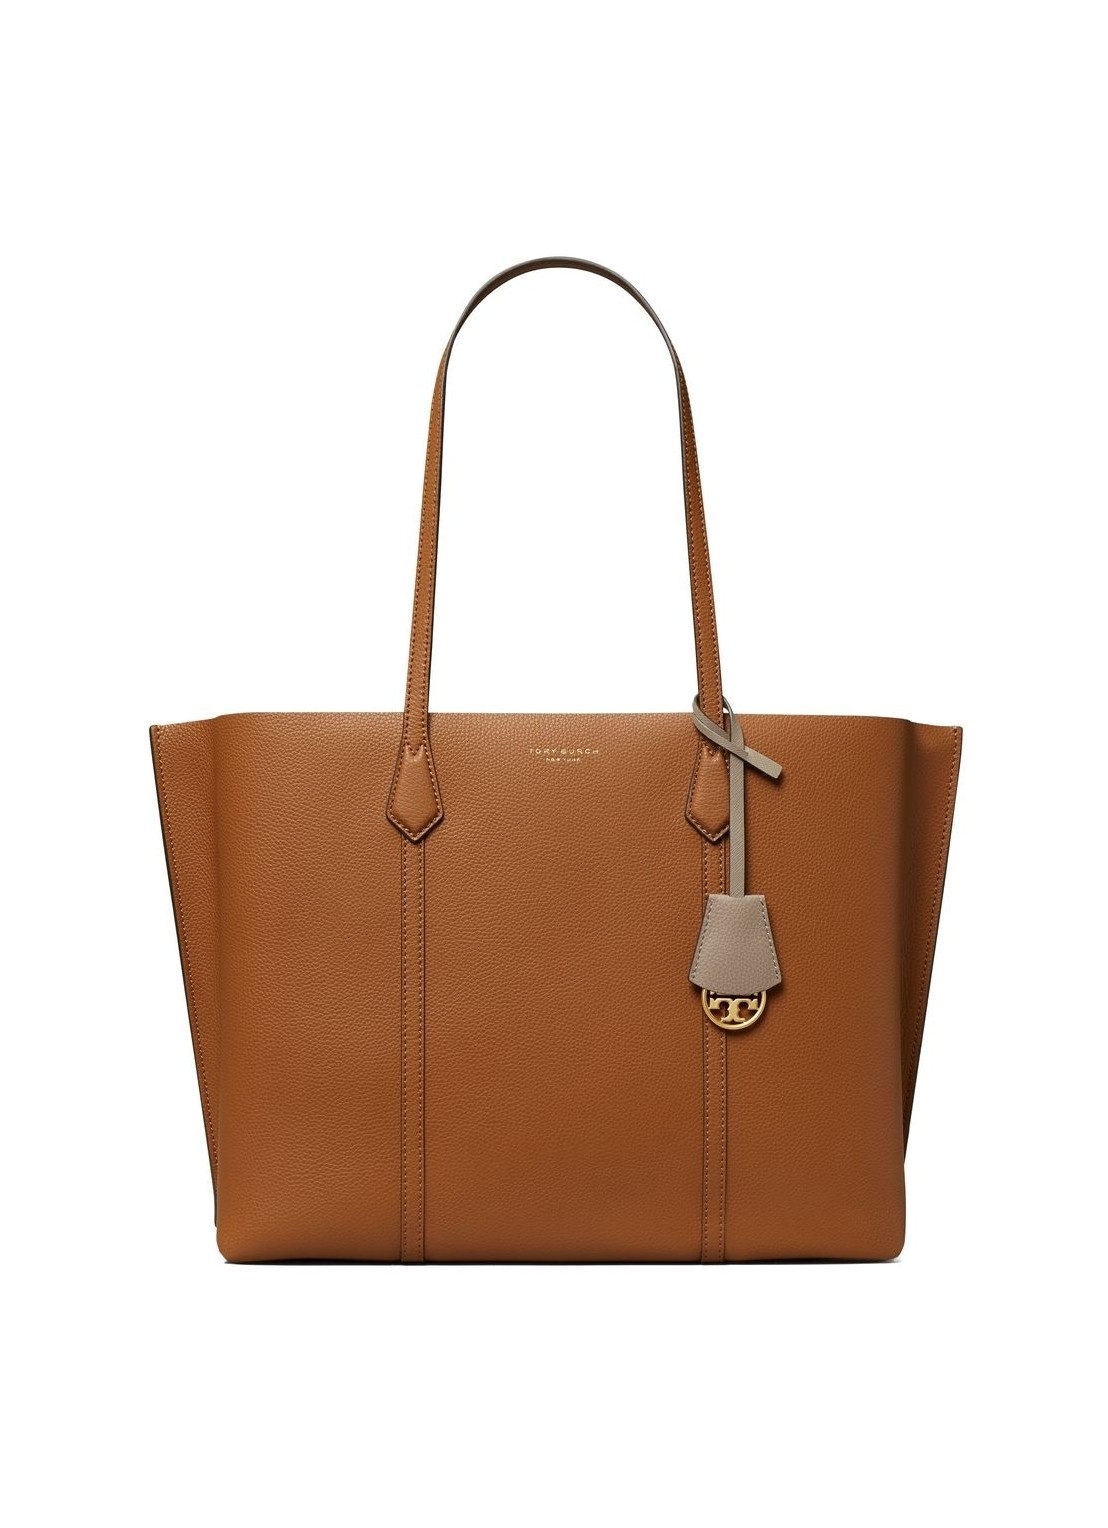 Handbag tory burch handbag woman perry triple-compartment tote 81932905 905 talla marron
 